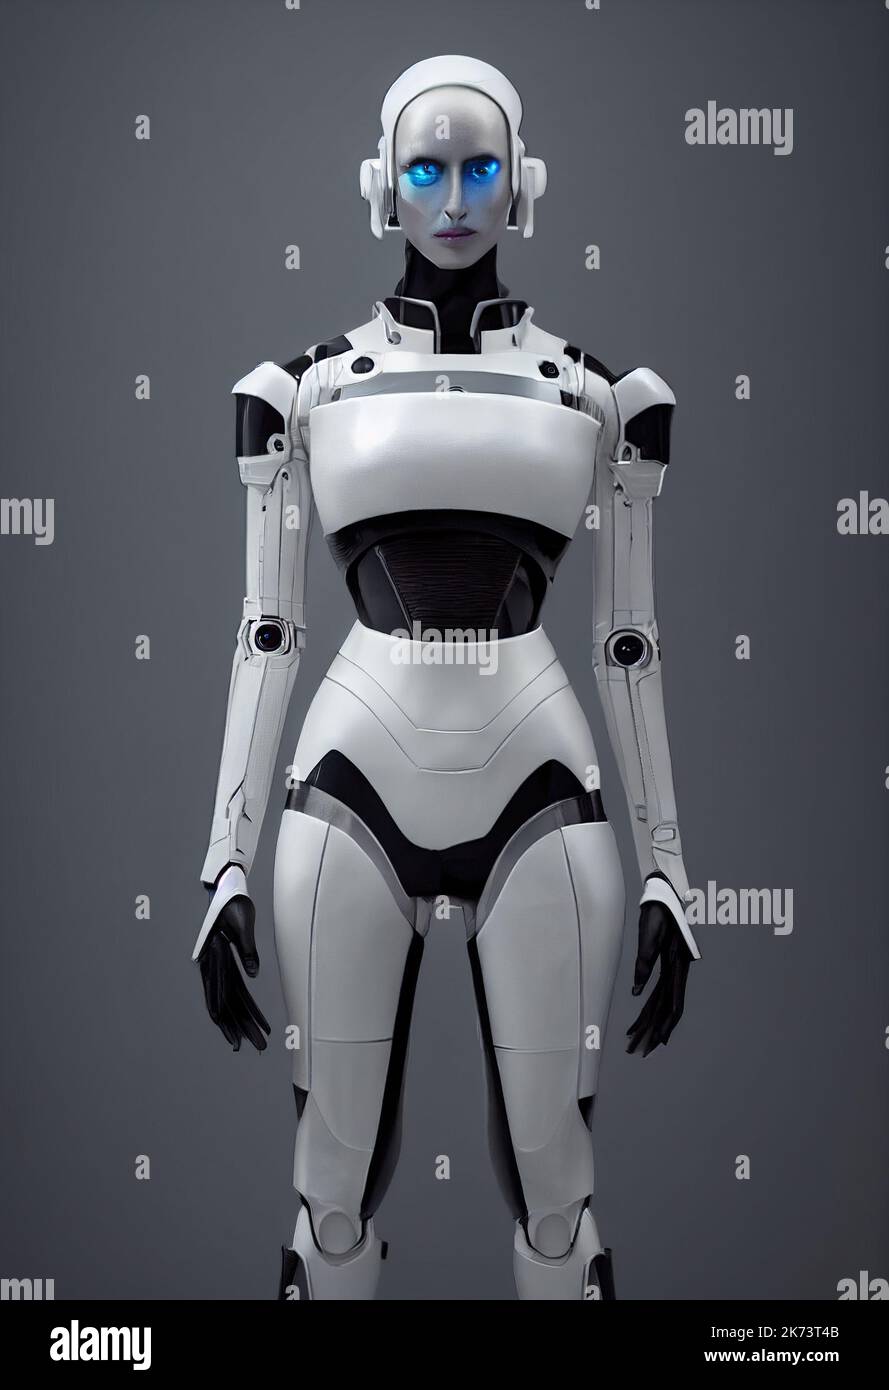 Face robot woman -Fotos und -Bildmaterial in hoher Auflösung – Alamy